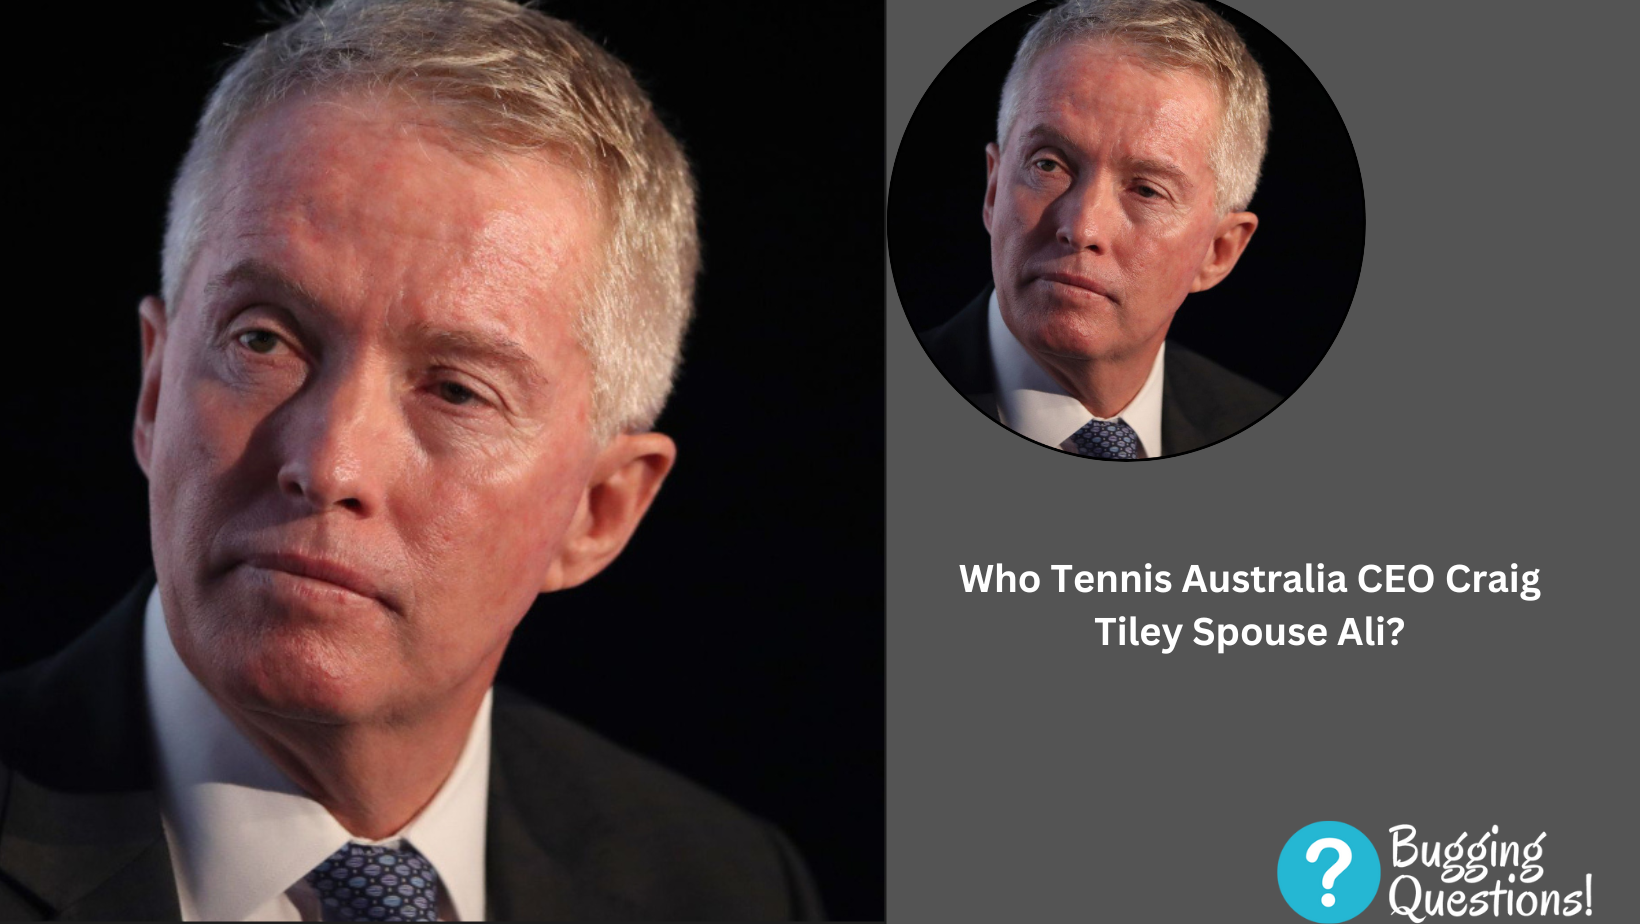 Who Tennis Australia CEO Craig Tiley Spouse Ali?